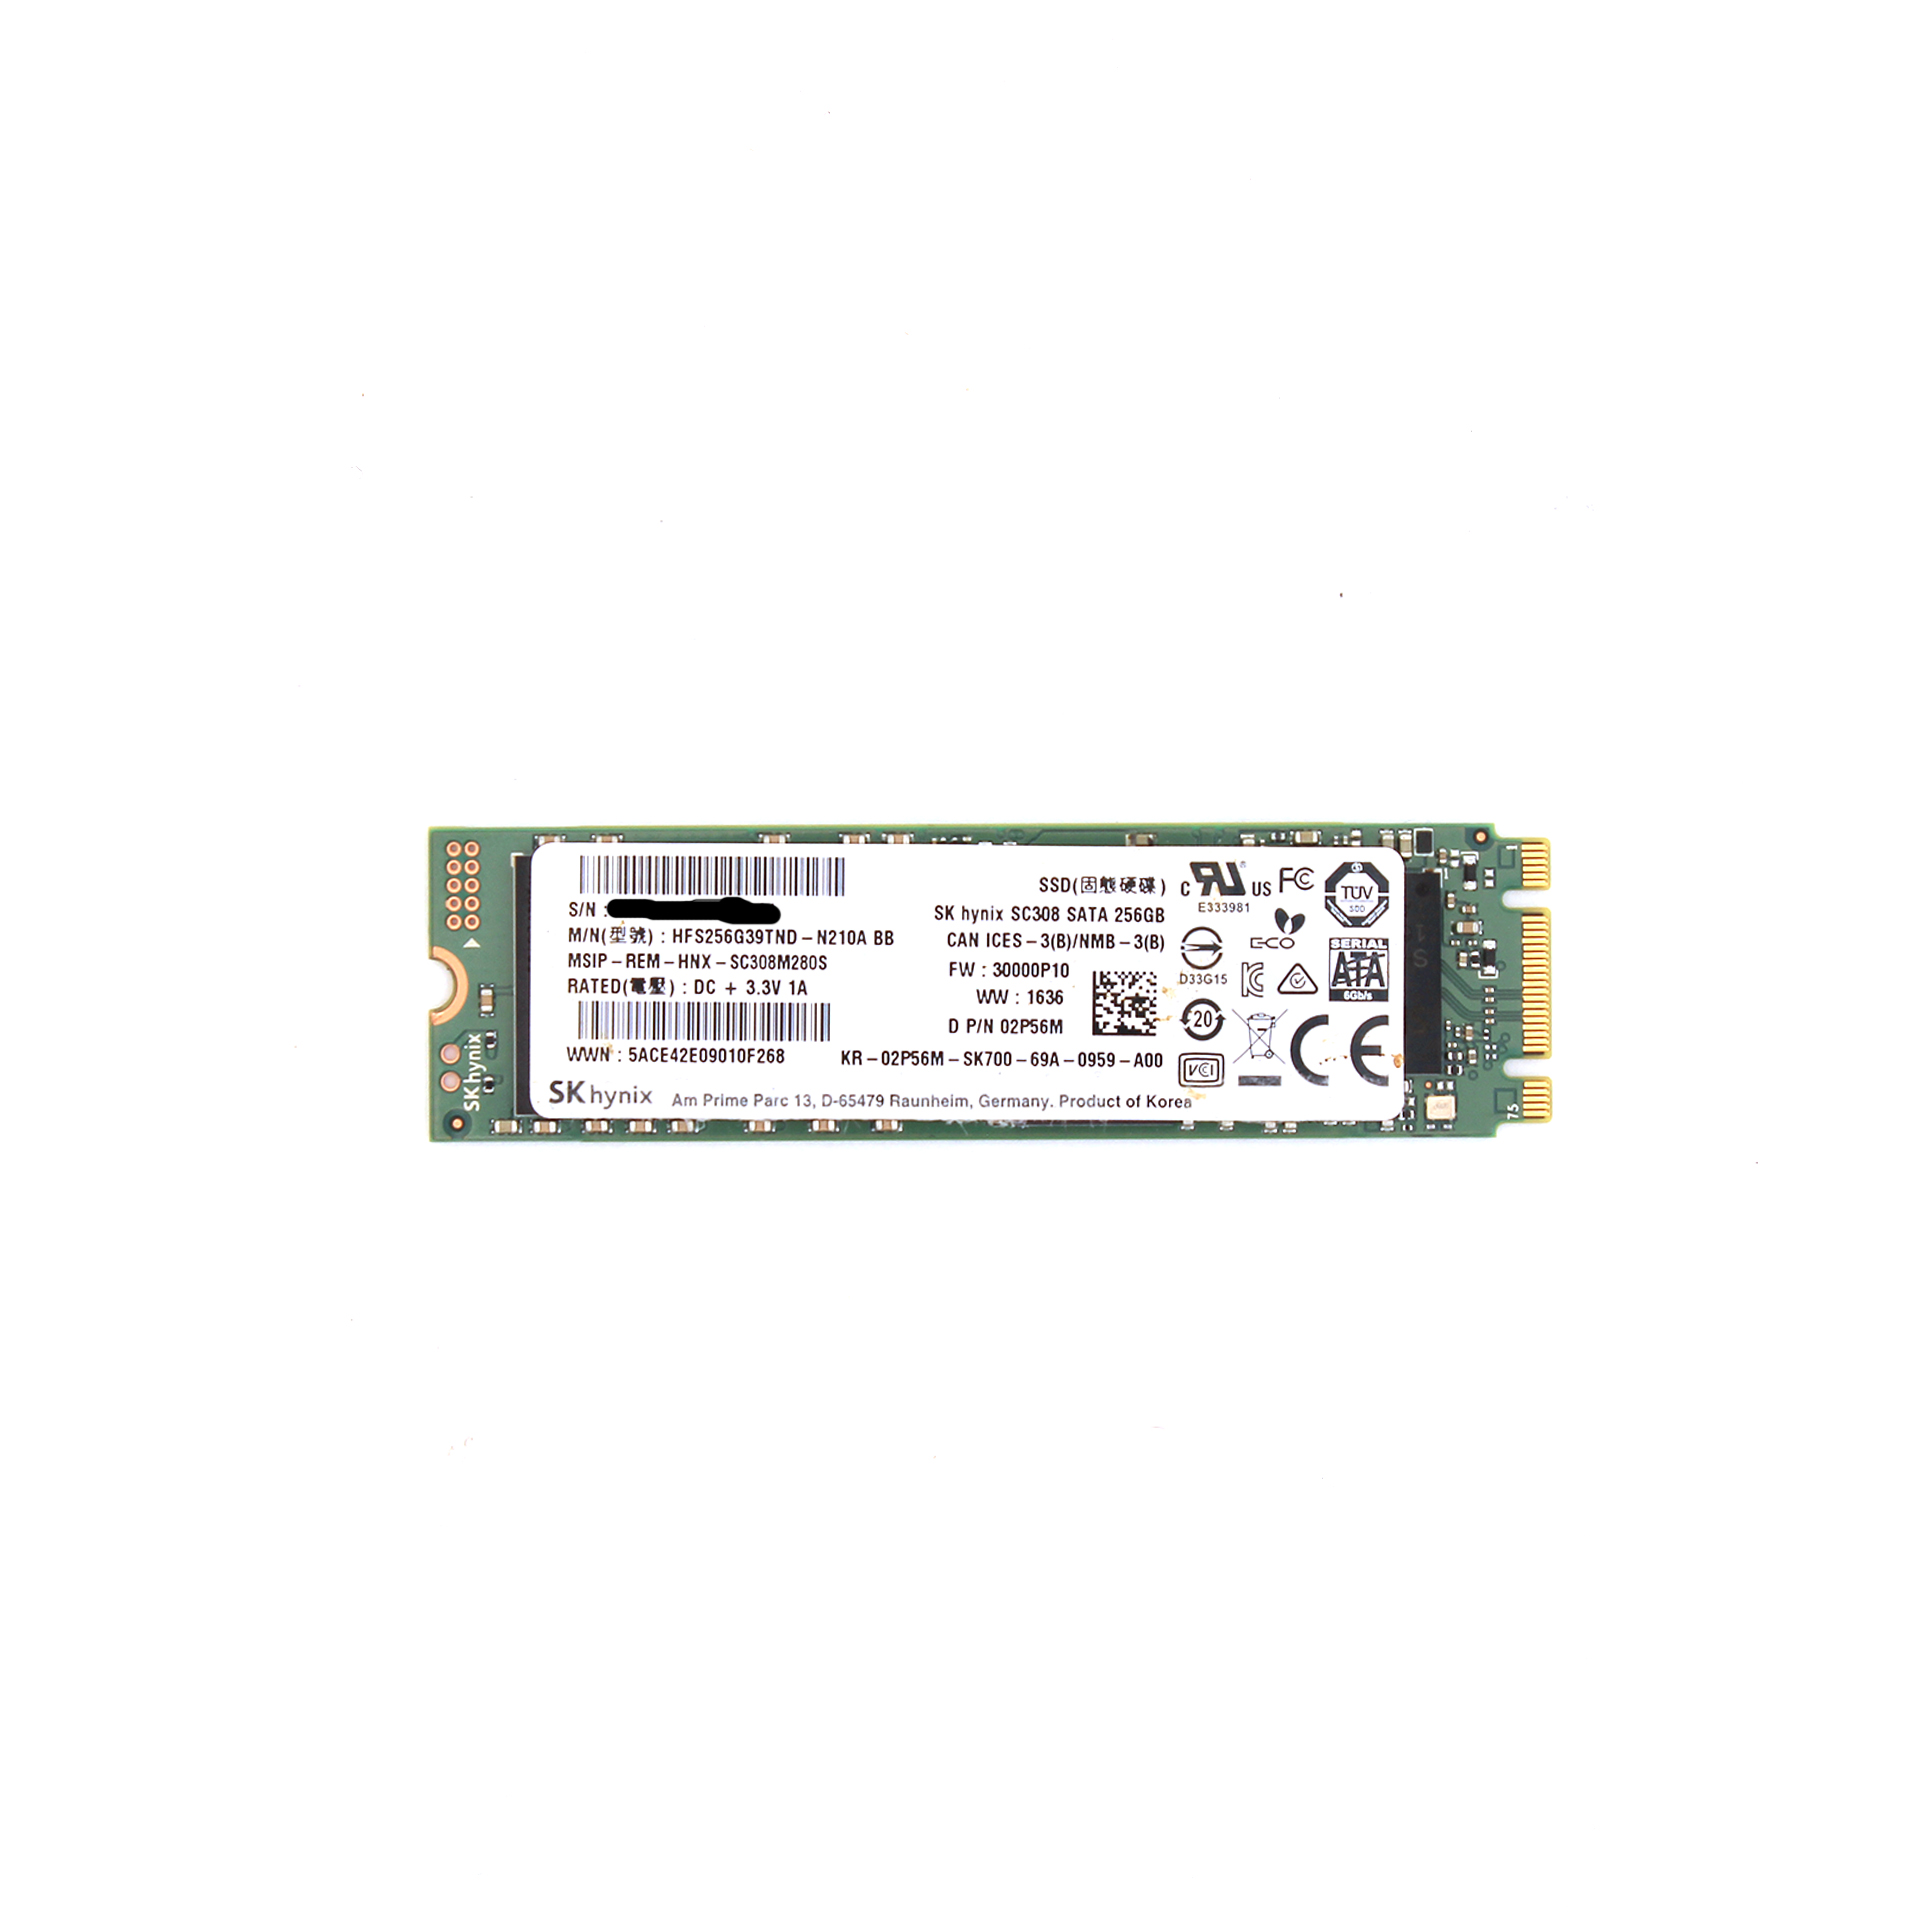 SK Hynix SC308 SSD 256 GB SATA based M.2 NGFF solid state drive